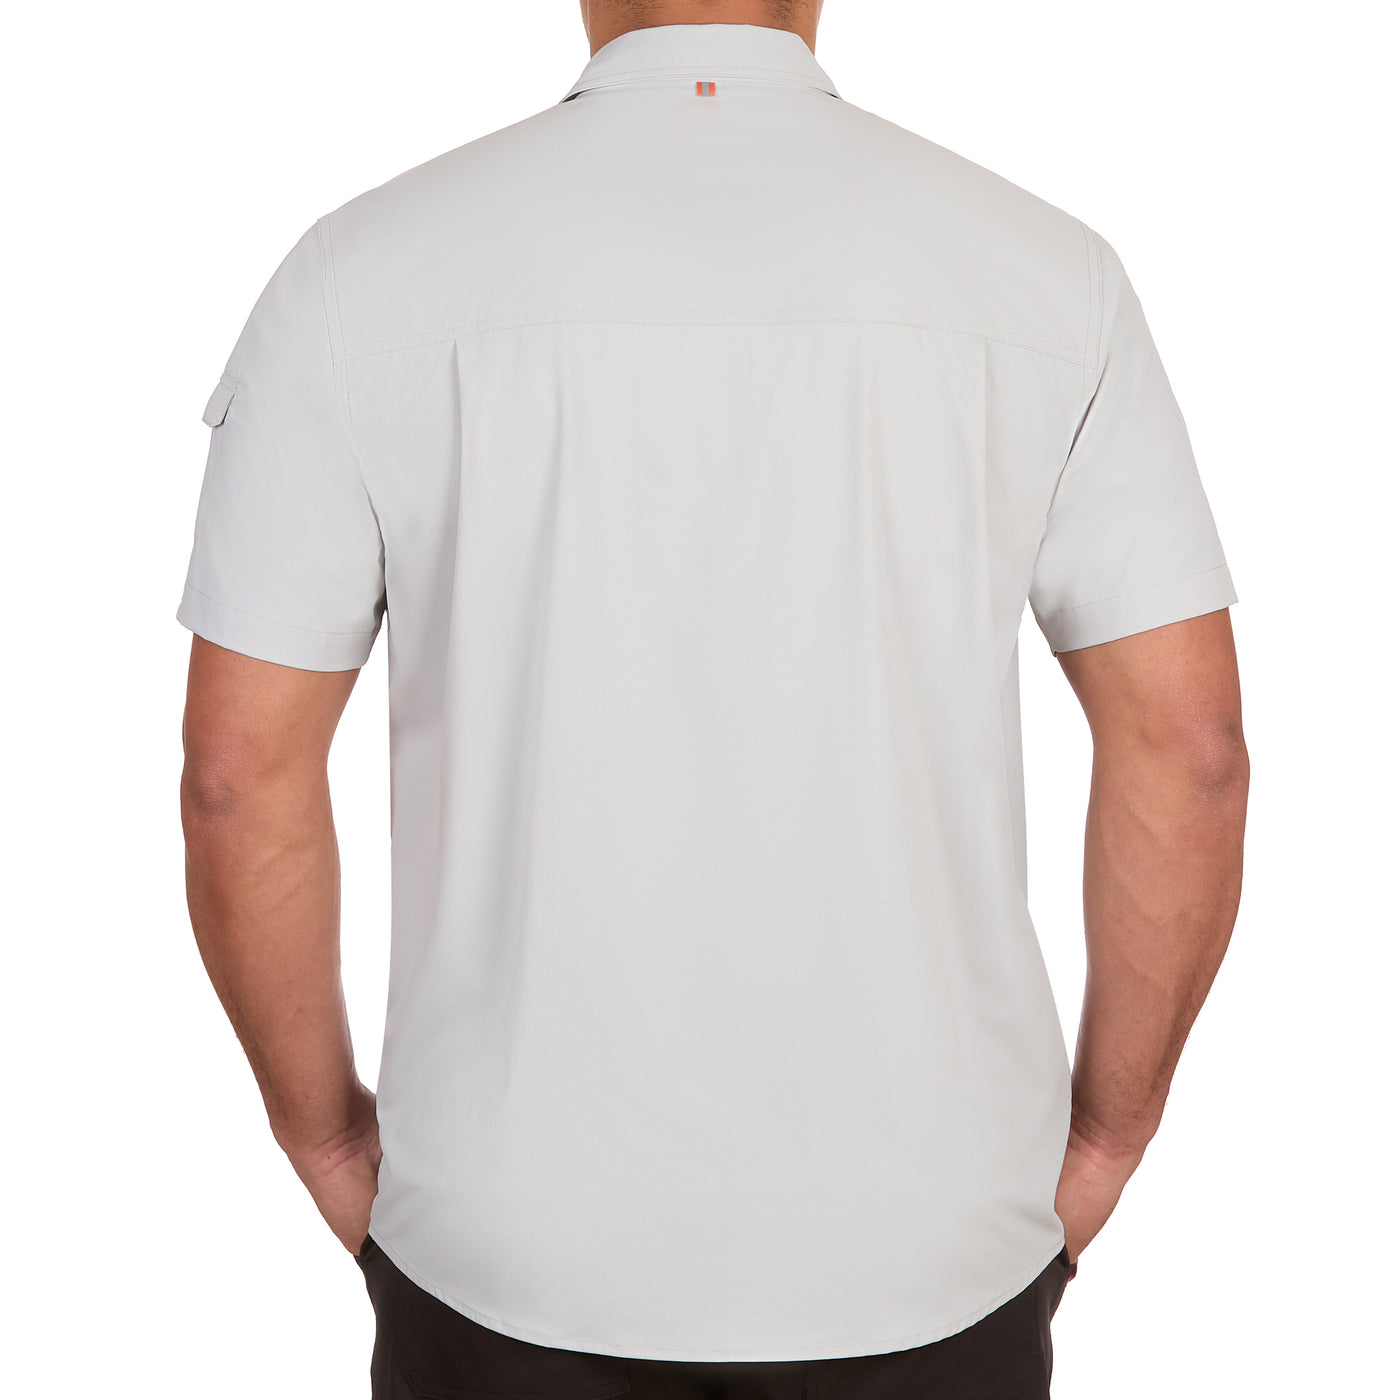 The American Outdoorsman Blackfoot River Short Sleeve Performance Fishing  Shirt for Men - Buy Online - 377944372